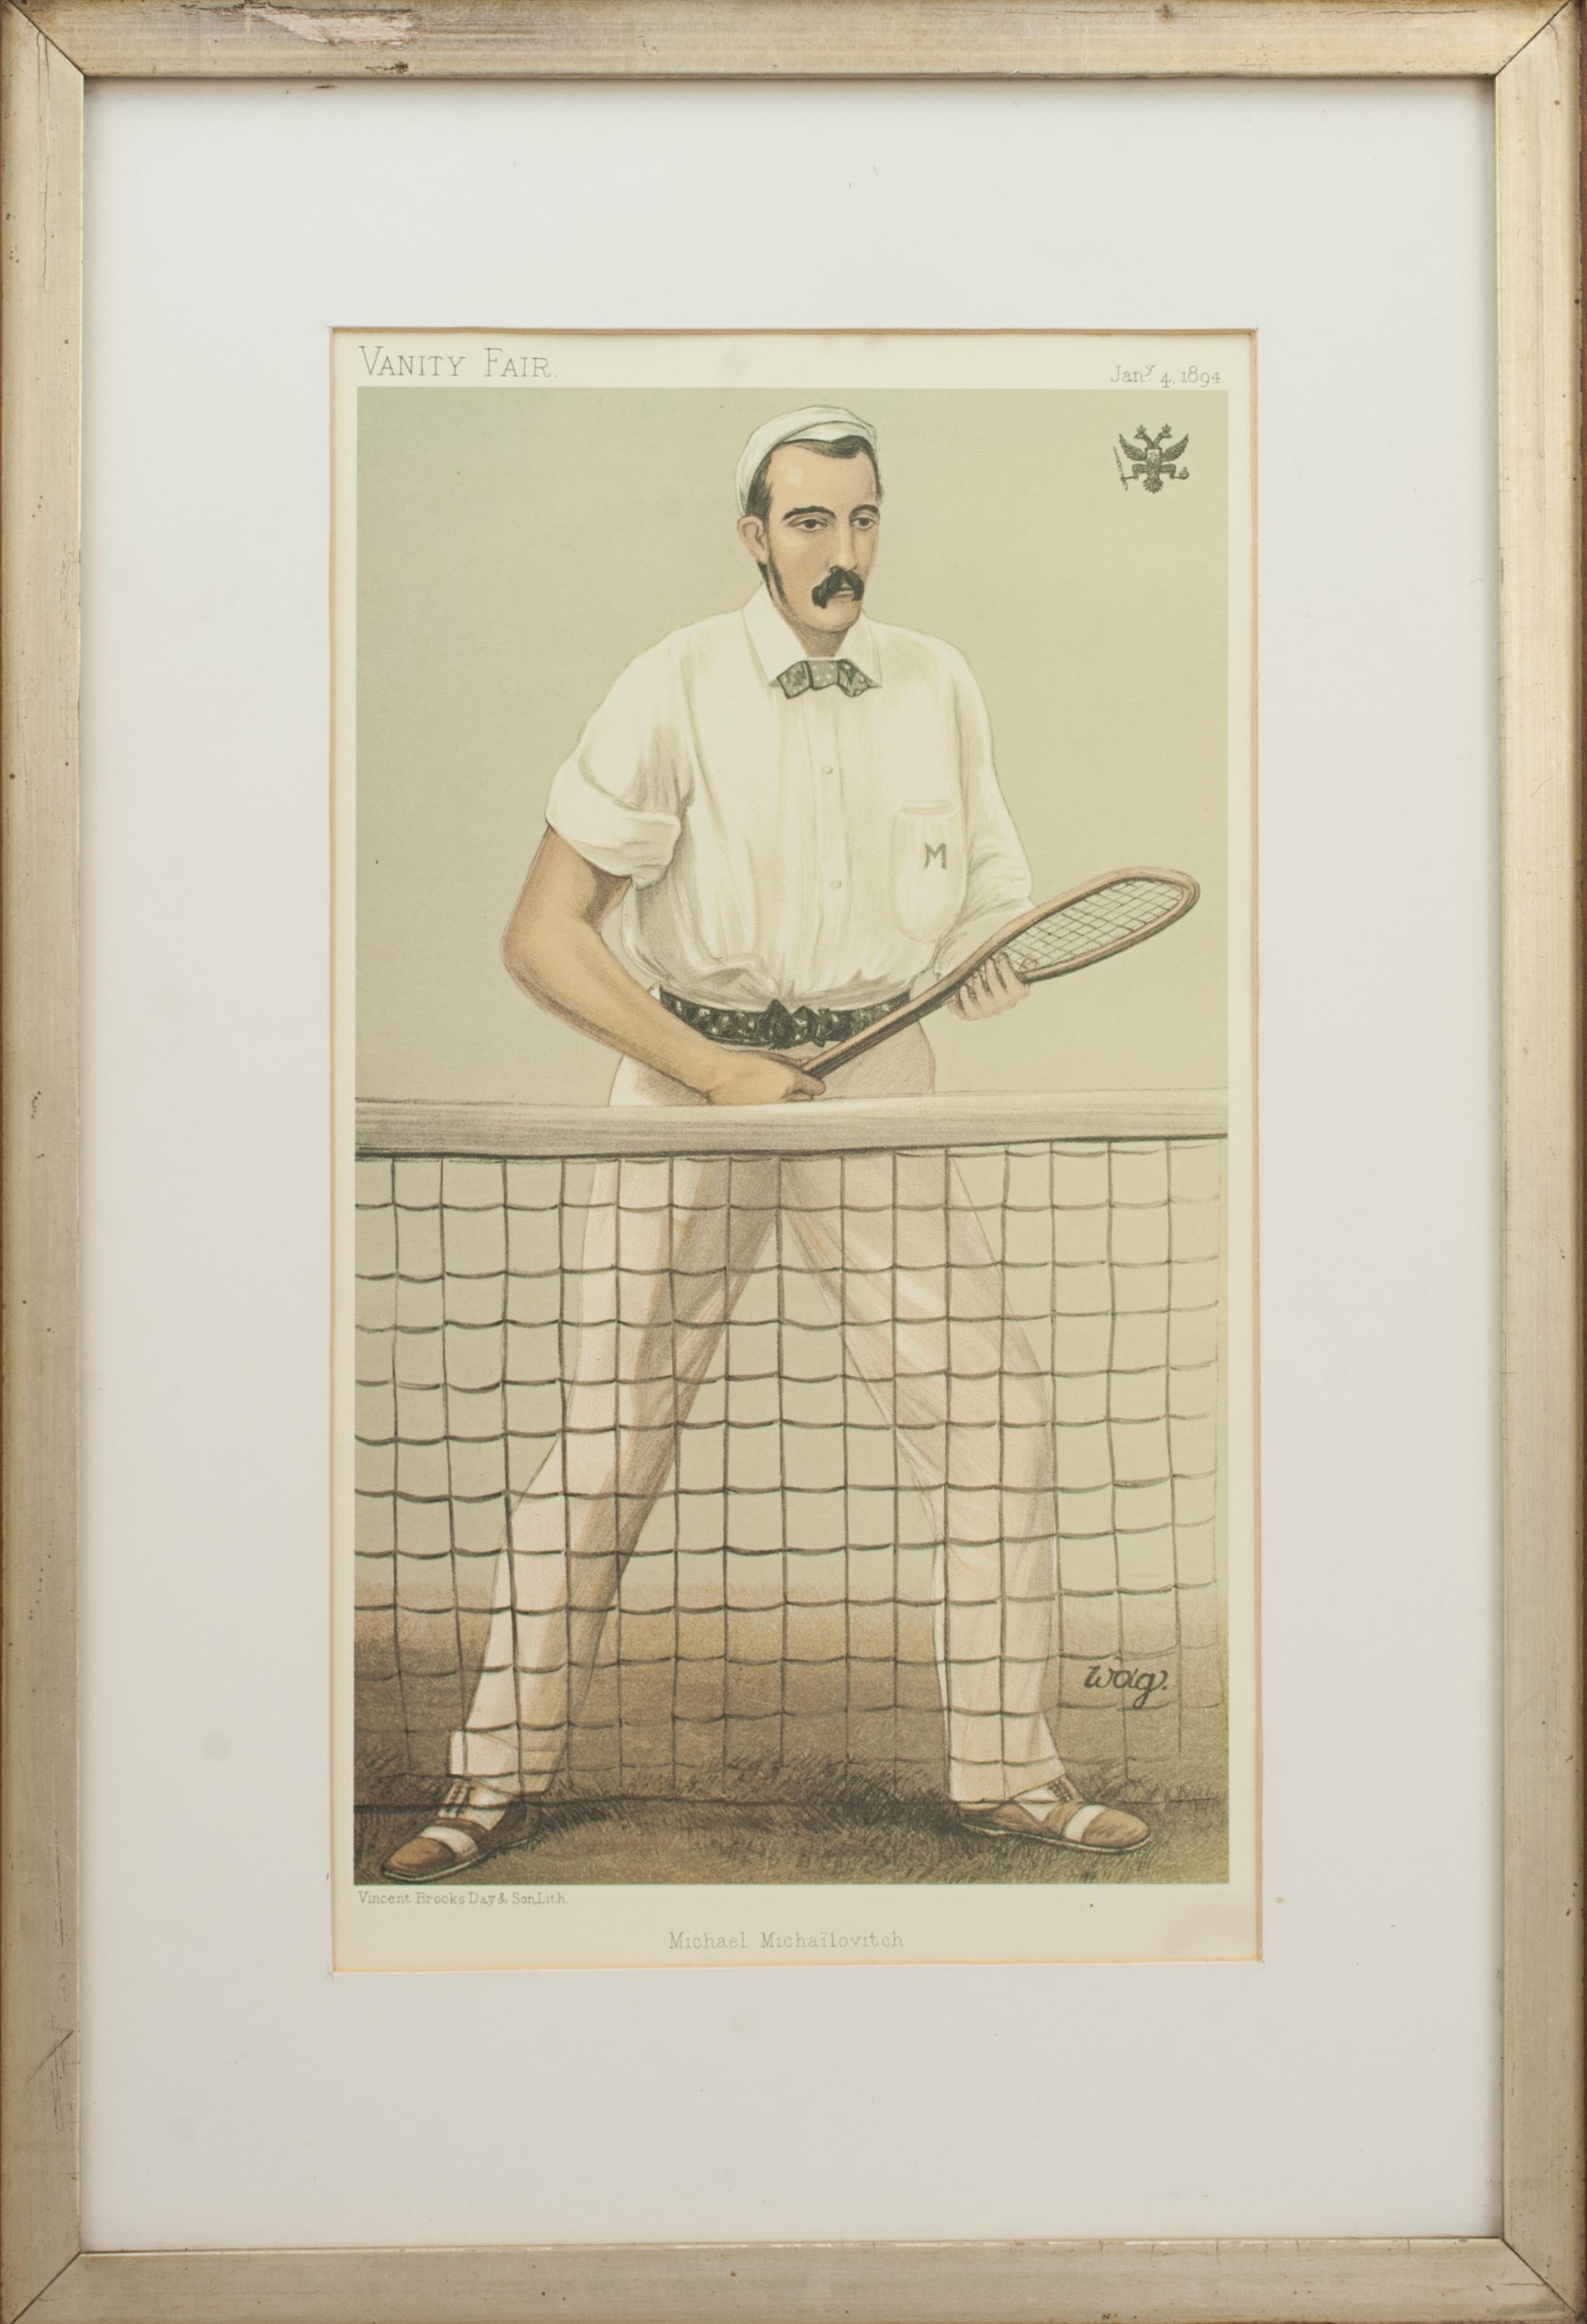 Sporting Art Tennis Vintage Vanity Fair Impression de Michailovitch de Russie en vente